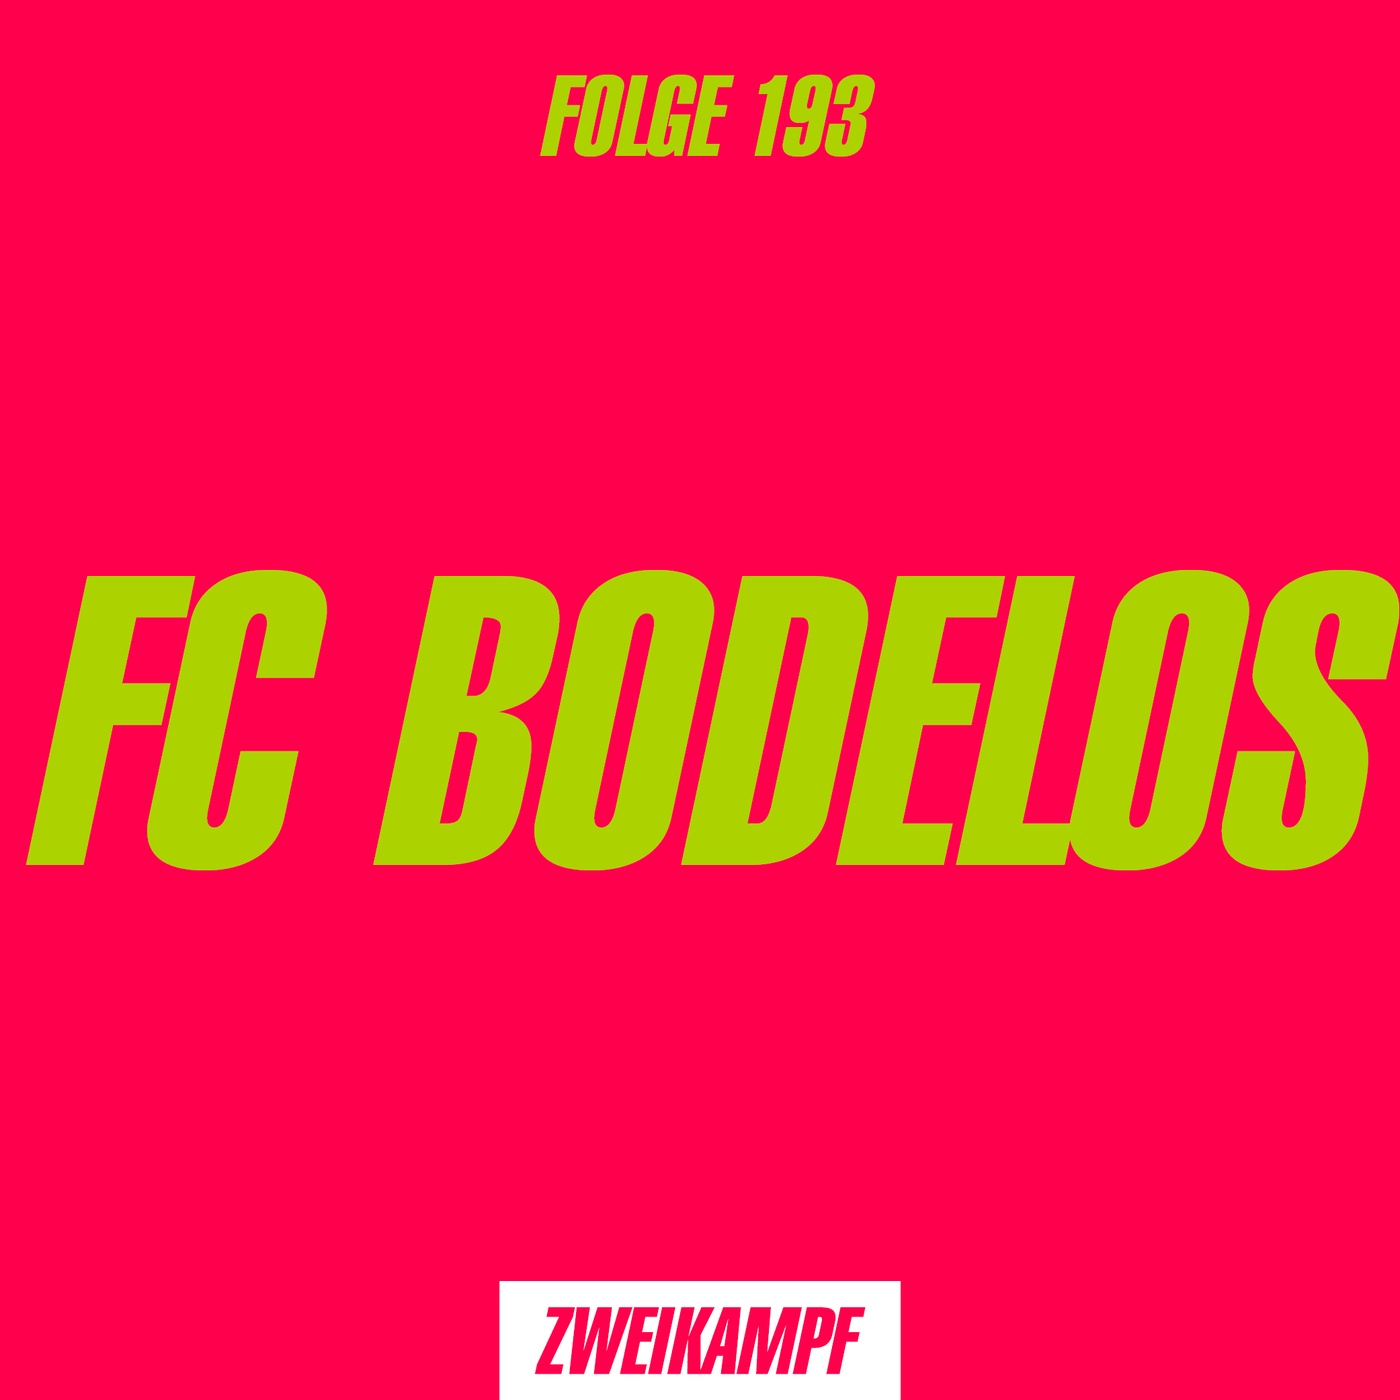 Folge 193: FC Bodelos